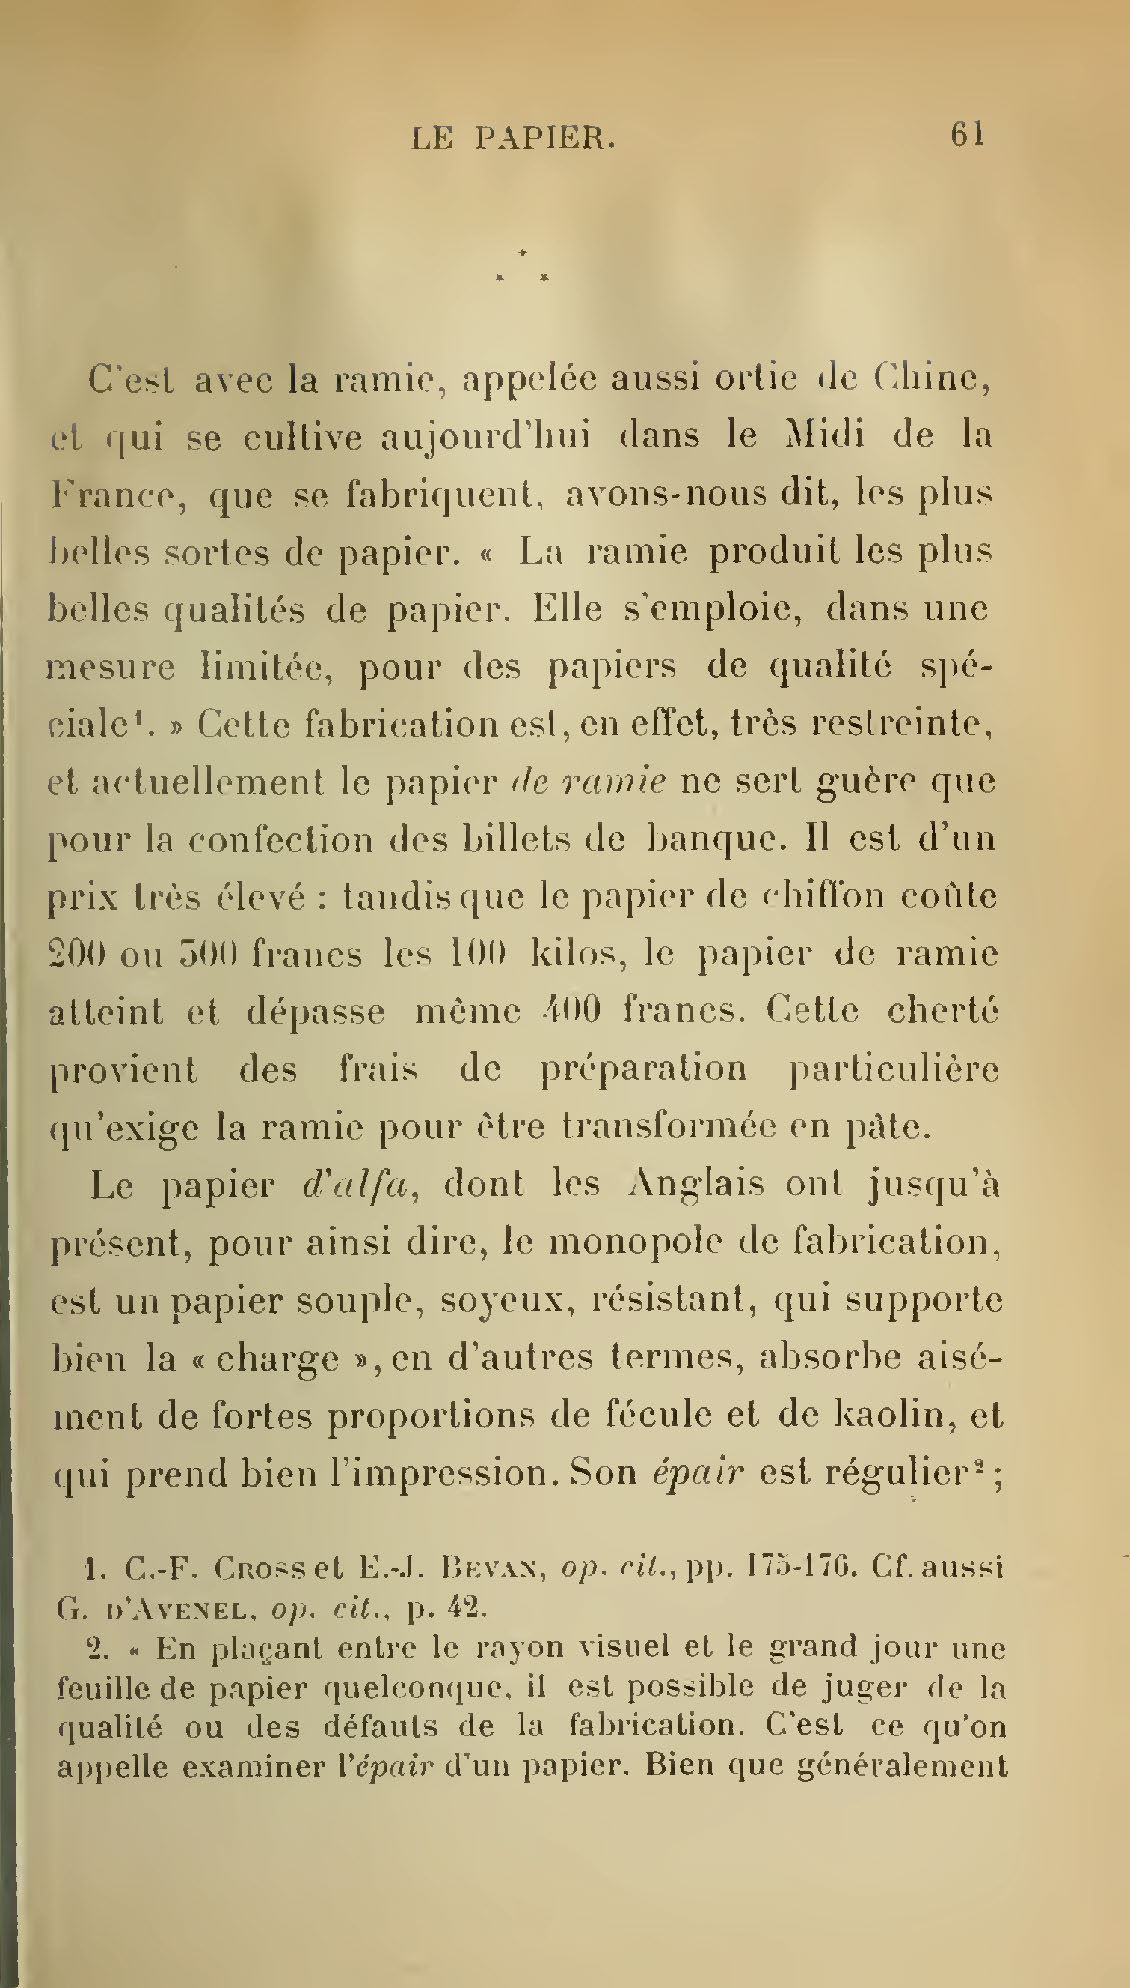 Albert Cim, Le Livre, t. III, p. 61.